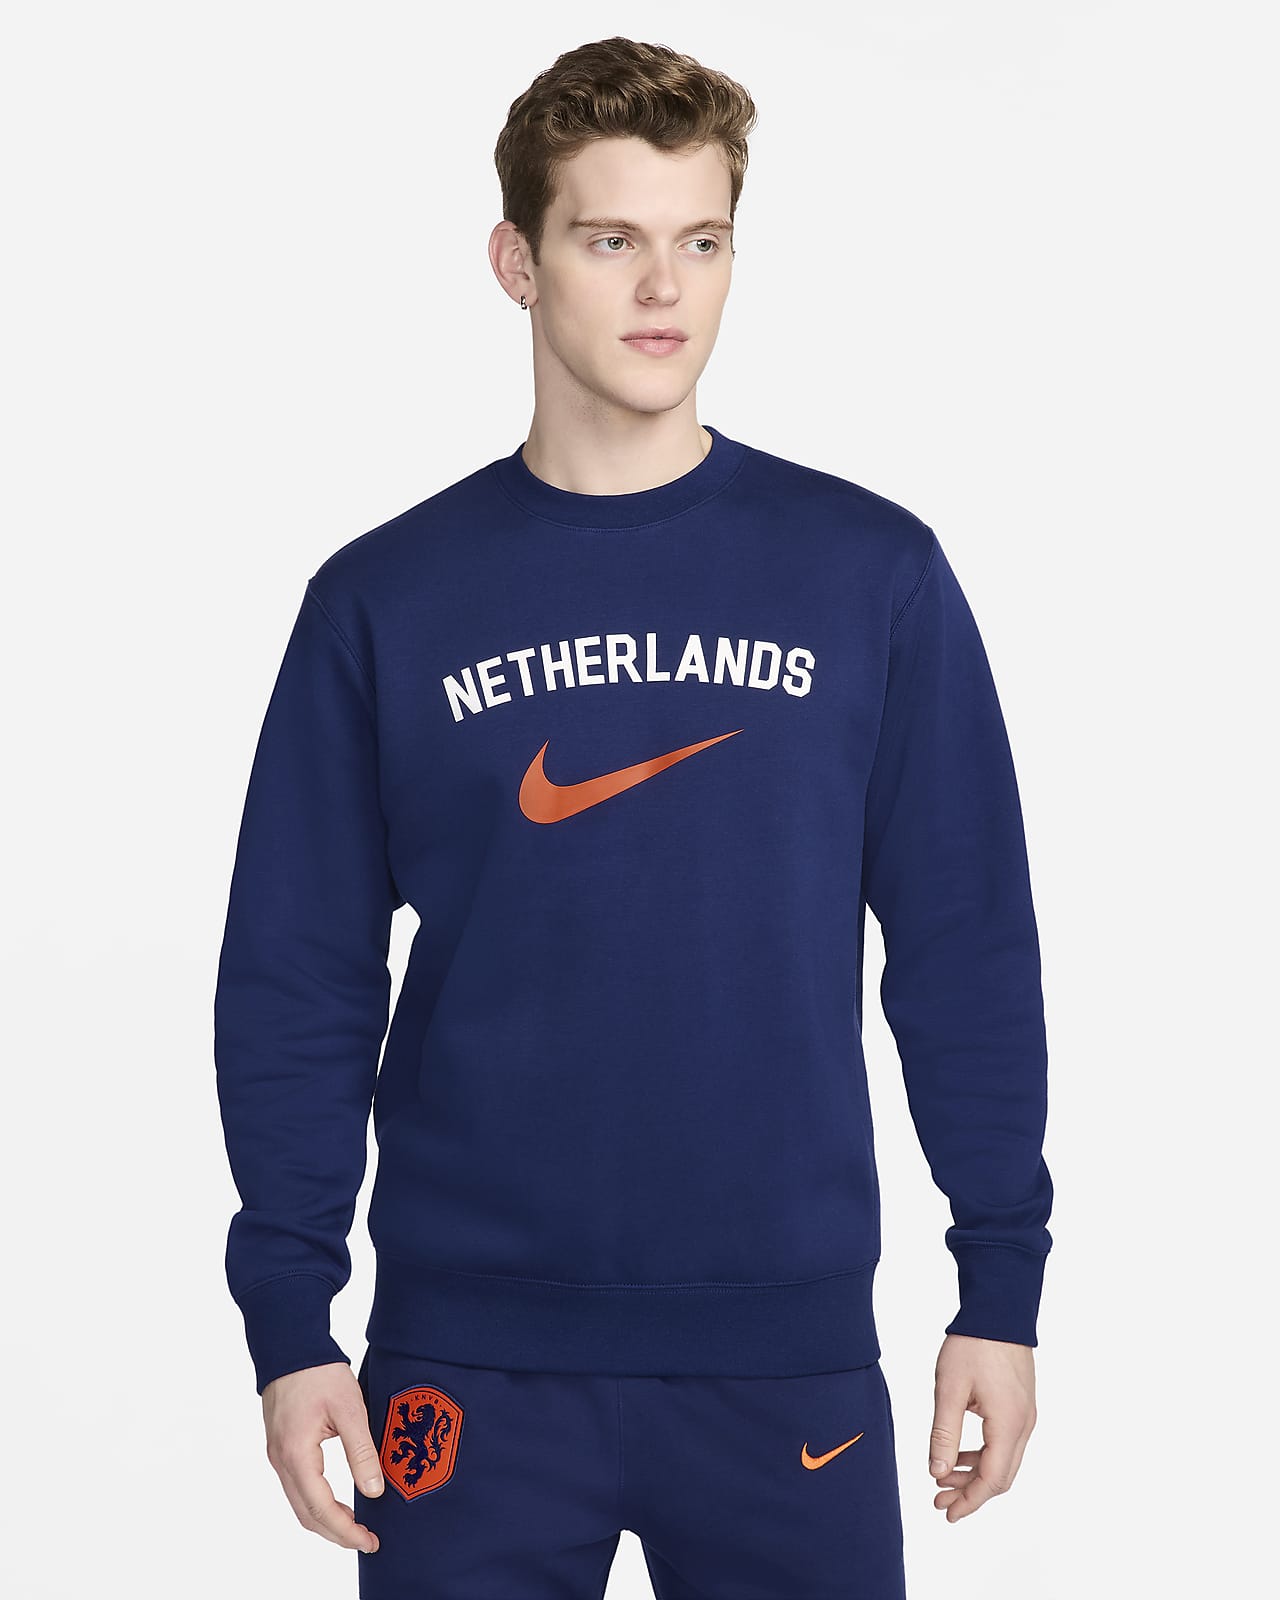 Netherlands Club Fleece Men's Nike Football Crew-Neck Sweatshirt